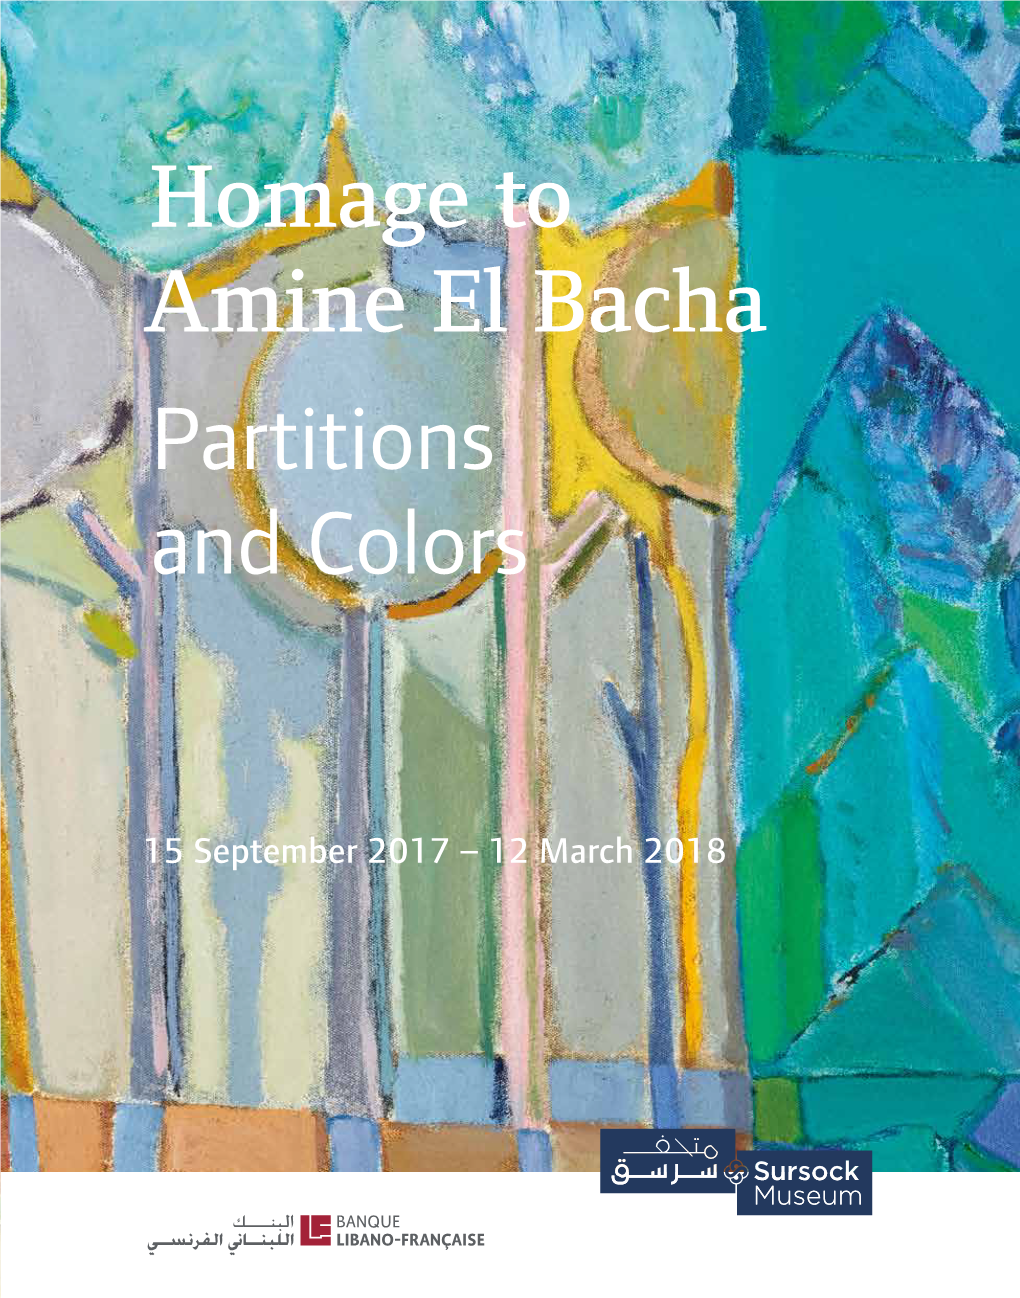 Amine El Bacha Partitions and Colors